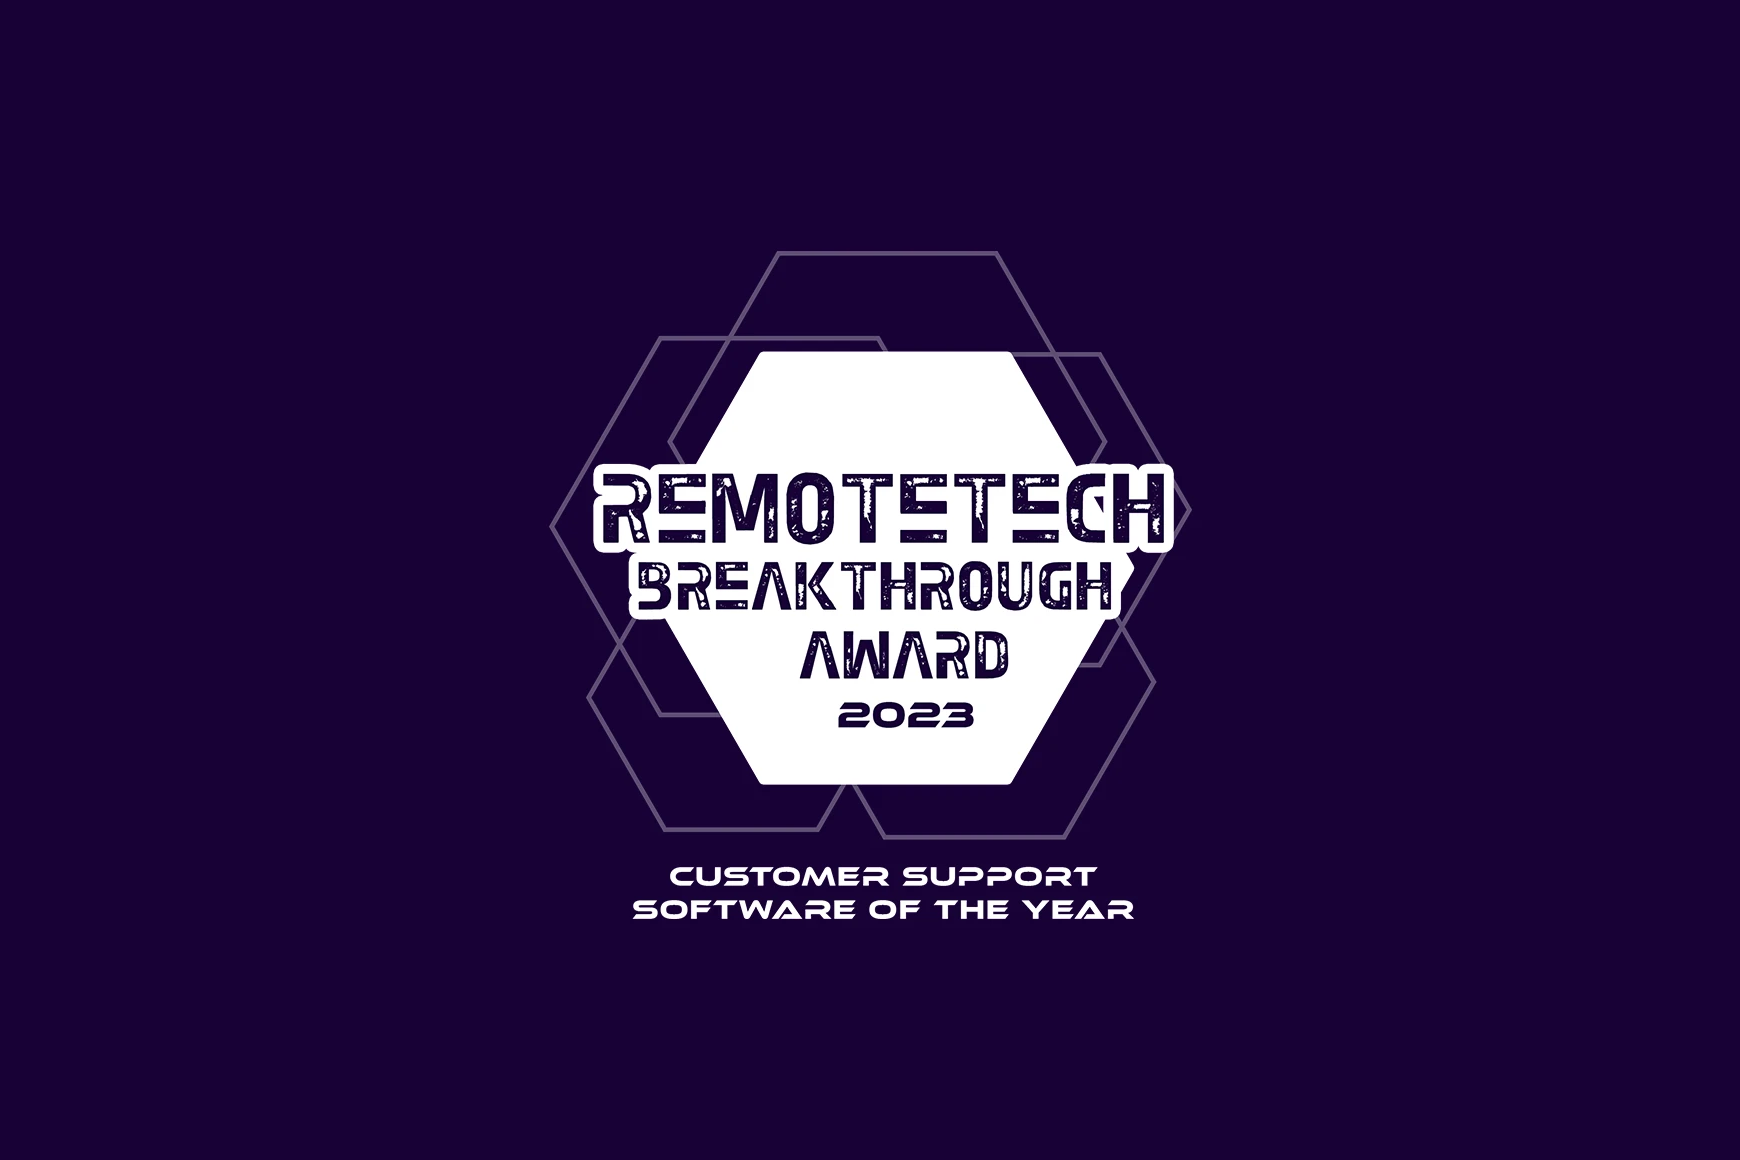 Talkdesk Financial Services Experience Cloud Wins 2023 Remotetech Breakthrough Award